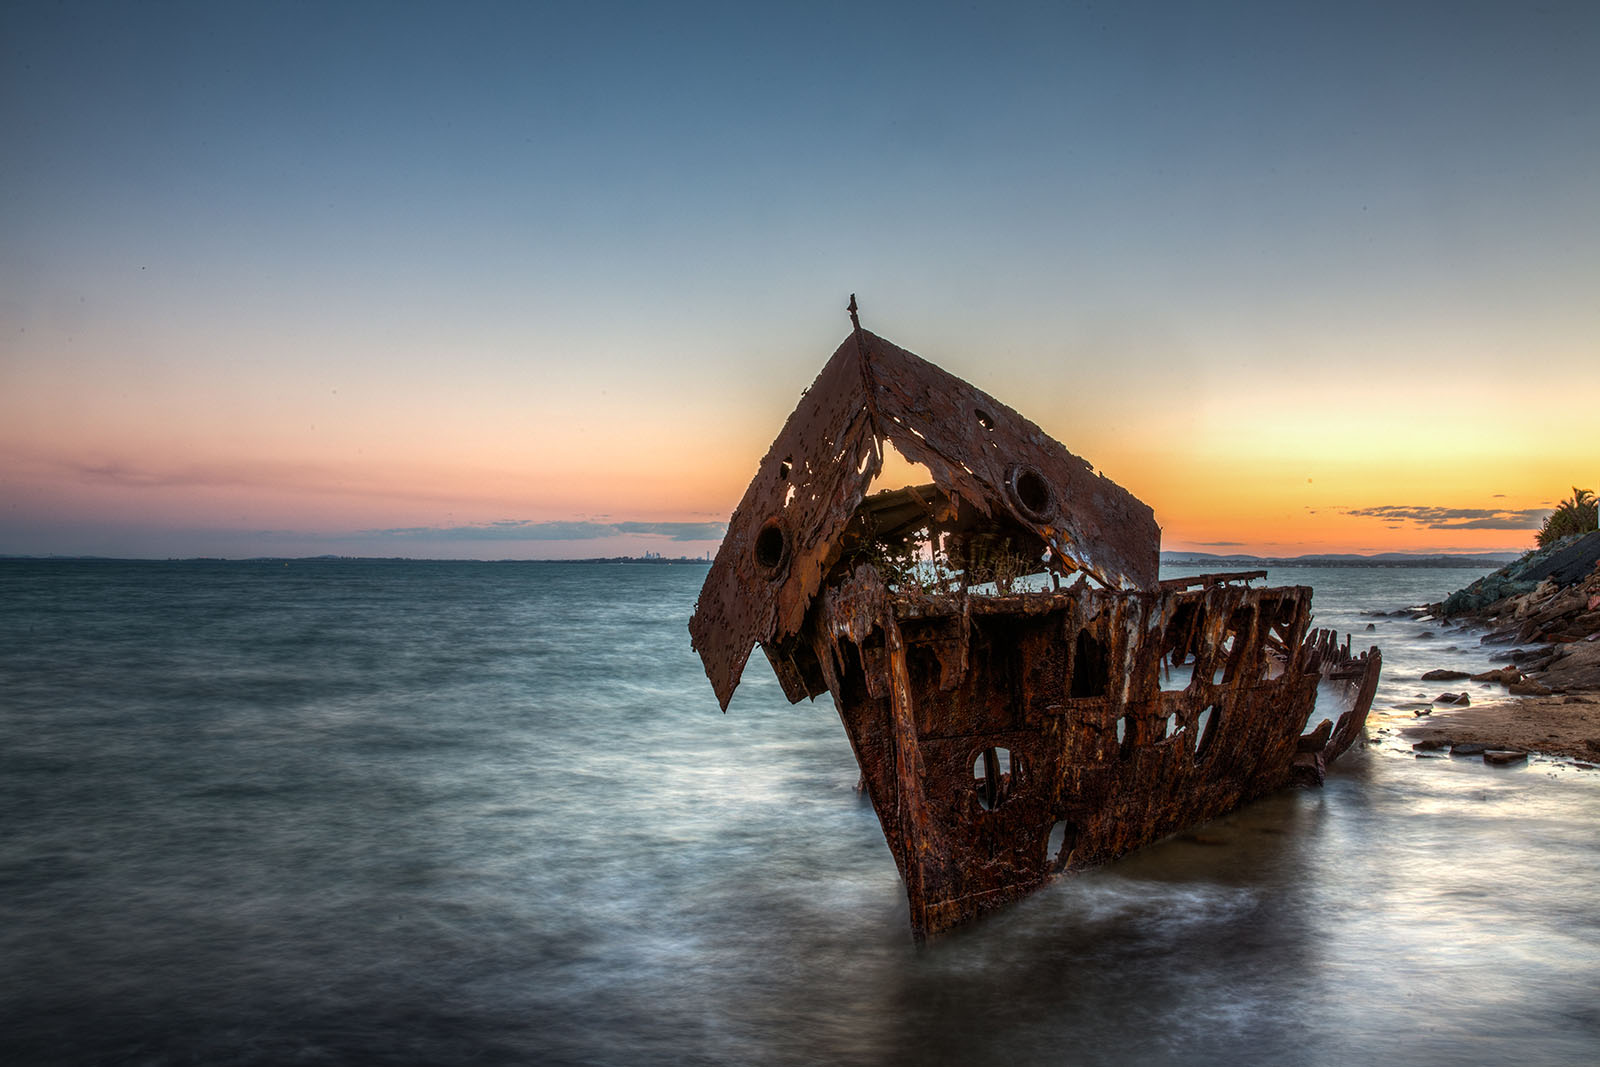 Gayundah Shipwreck off Moreton Bay